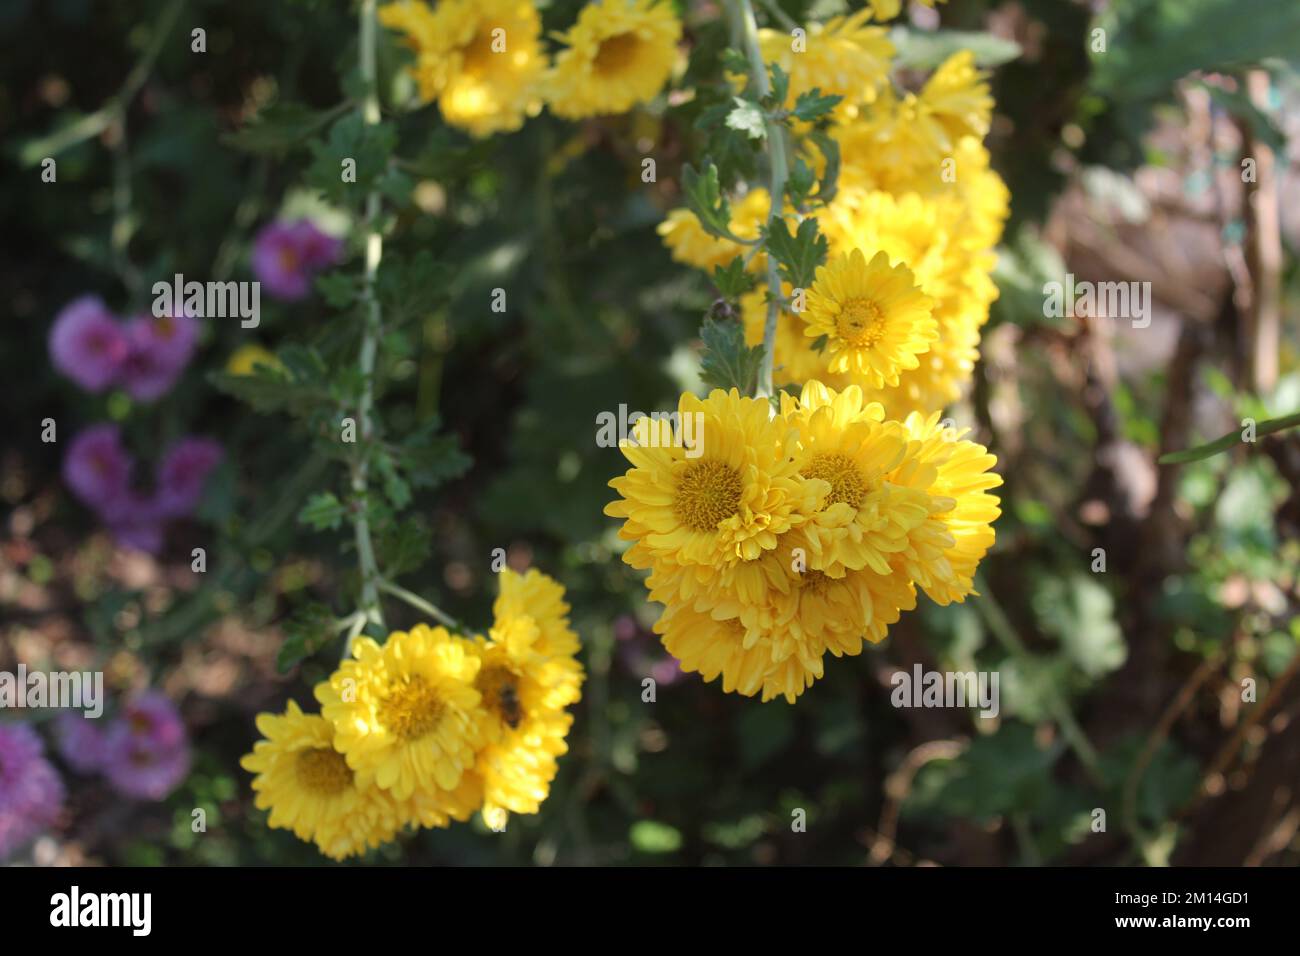 Yellow flower (hardy garden mum or chrysanthemum) in garden. Stock Photo